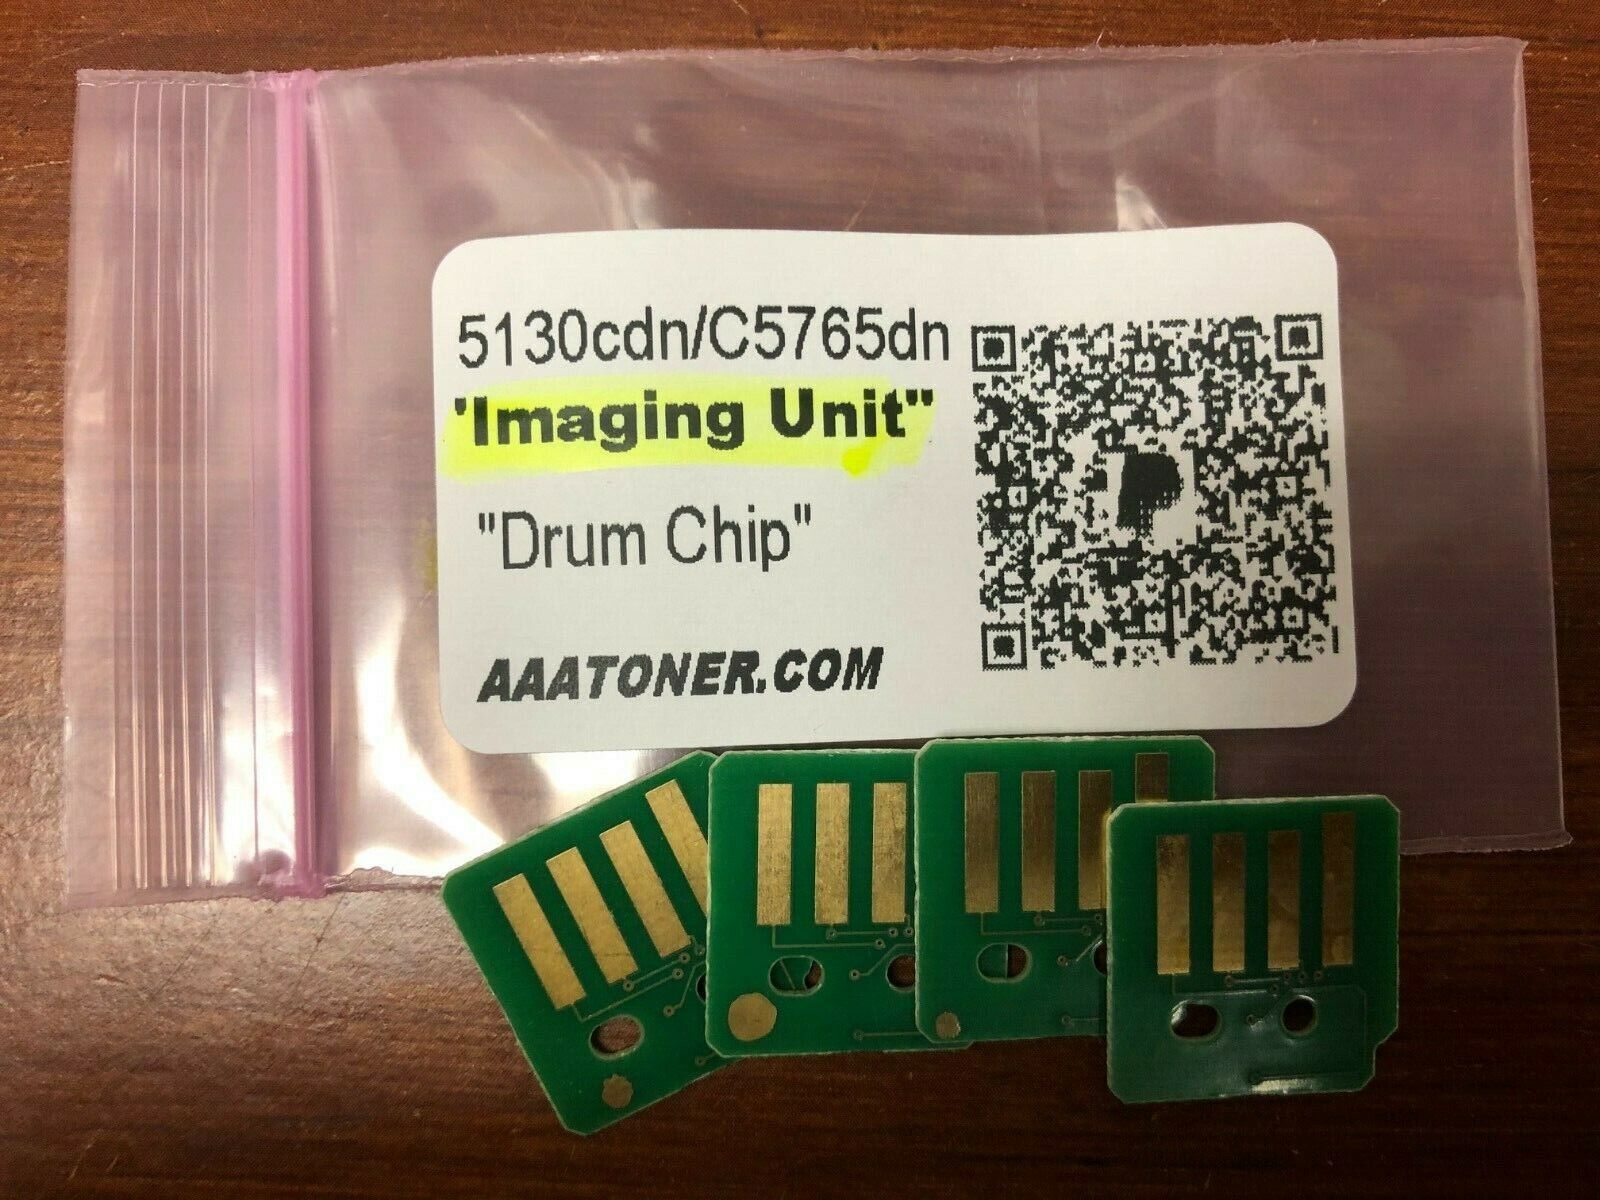 4 x DRUM Chip (IMAGING UNIT) for Dell 5130cdn, c5765dn Laser Printer Refill